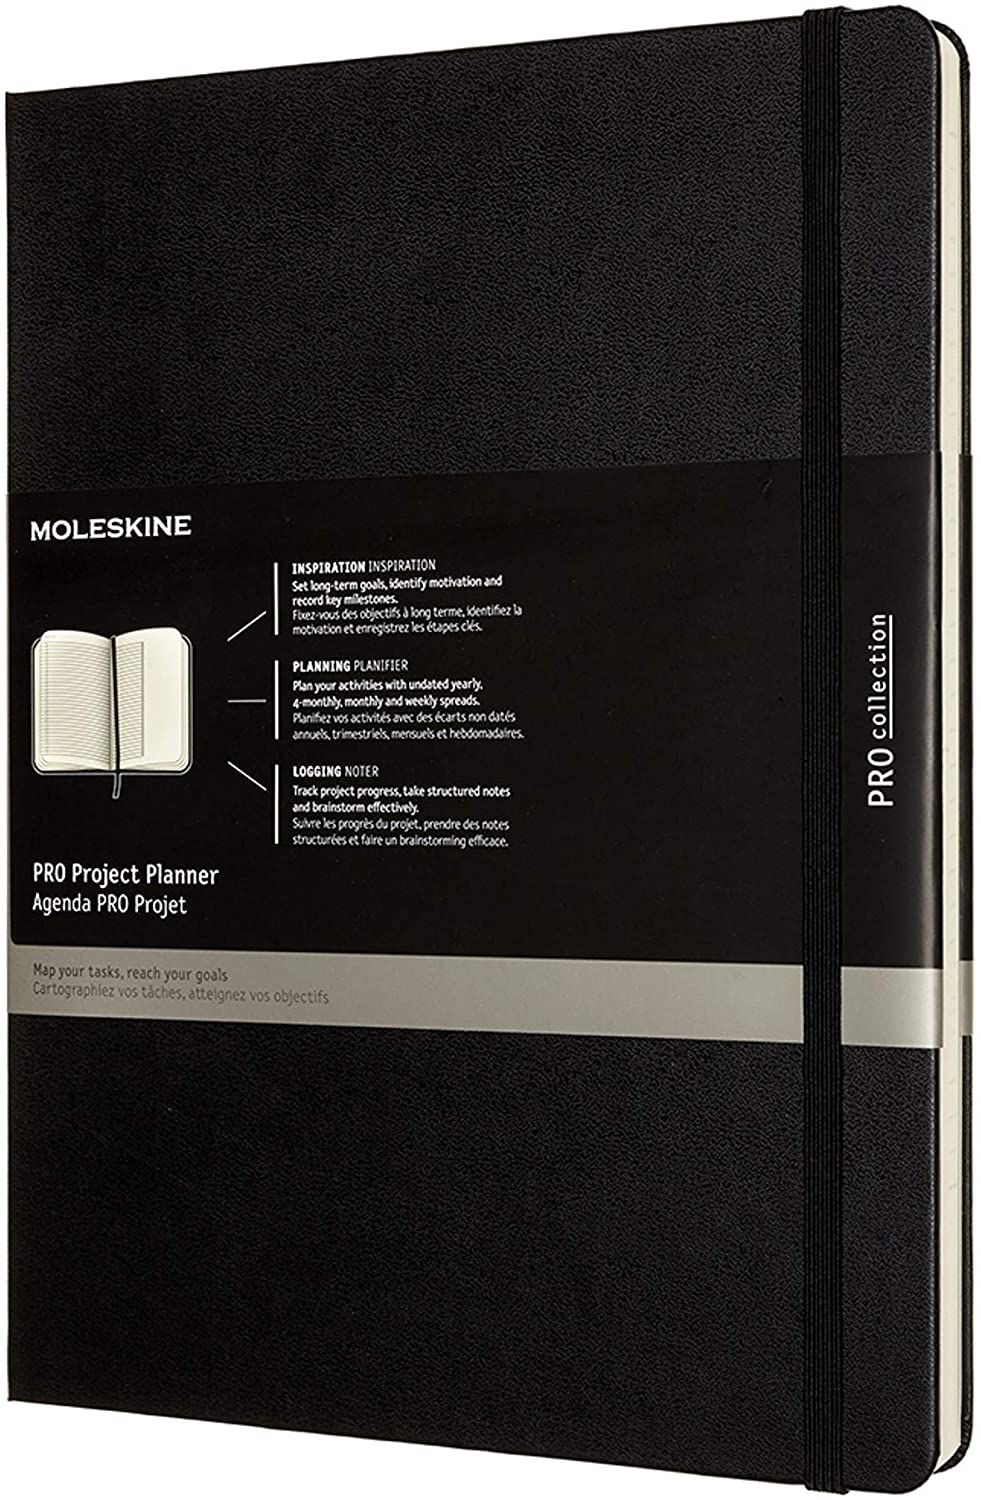 Agenda - Moleskine - Pro Project Planner - Black, X-Large, Hard Cover | Moleskine